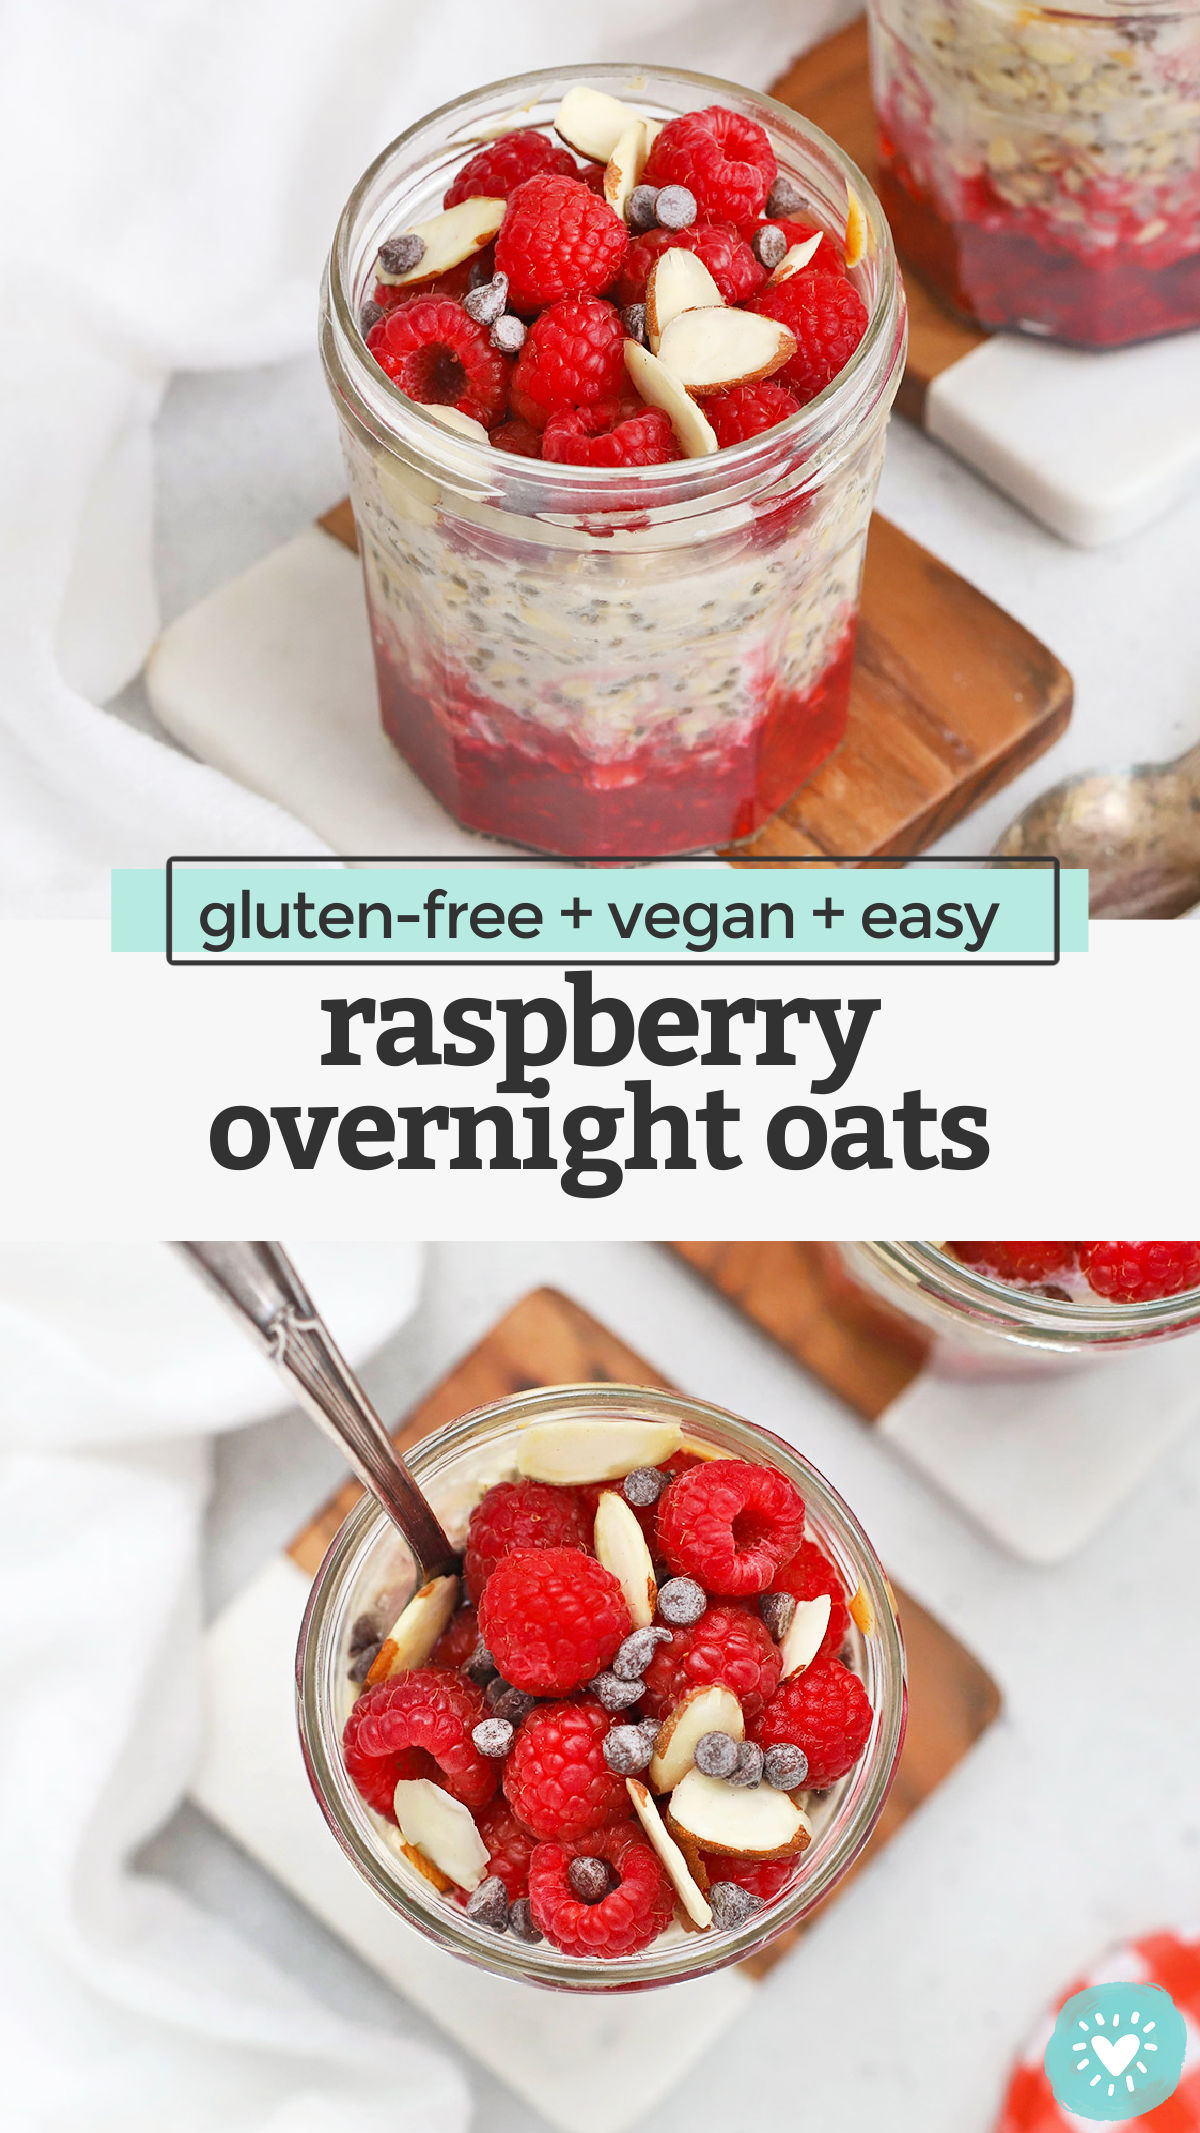 Raspberry Overnight Oats - An easy, delicious, healthy meal prep breakfast! // Raspberry Almond Overnight Oats // Raspberry Overnight Oats Recipe // Berry Overnight Oats // Vegan breakfast // healthy breakfast // gluten-free breakfast #overnightoats #oats #oatmeal #healthybreakfast #glutenfree #vegan